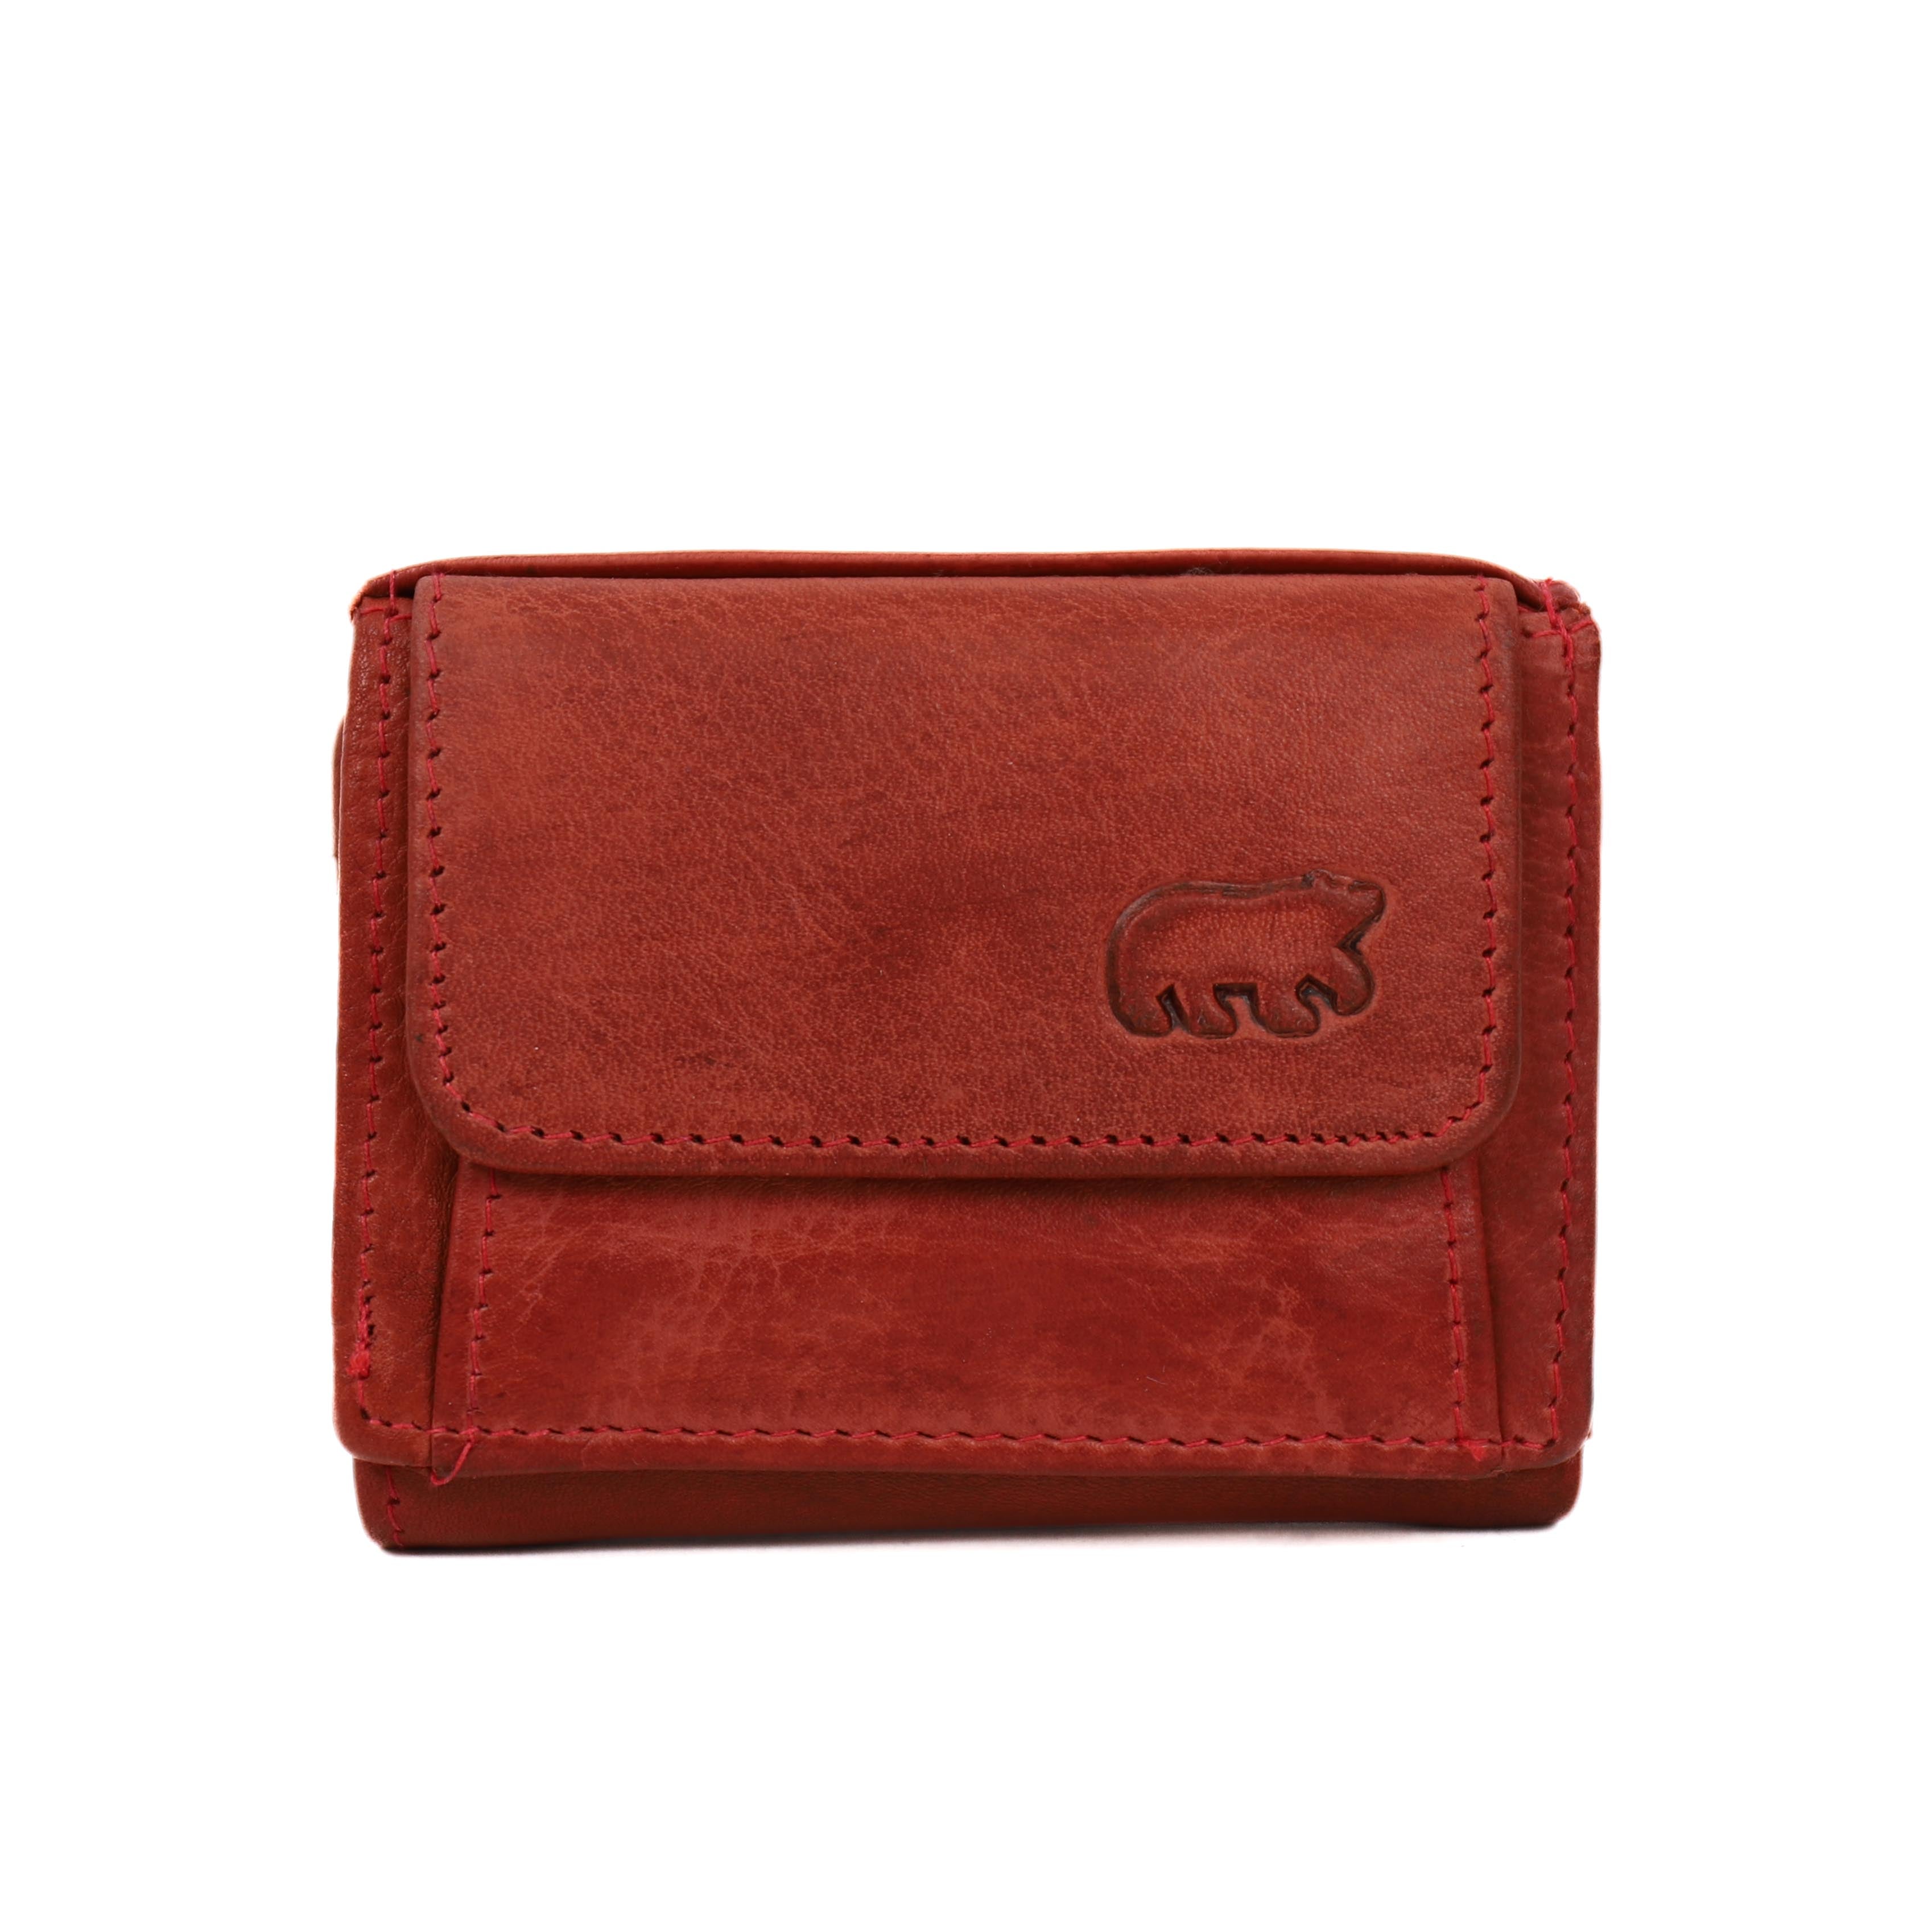 Wallet 'Nana' red - CP 4102